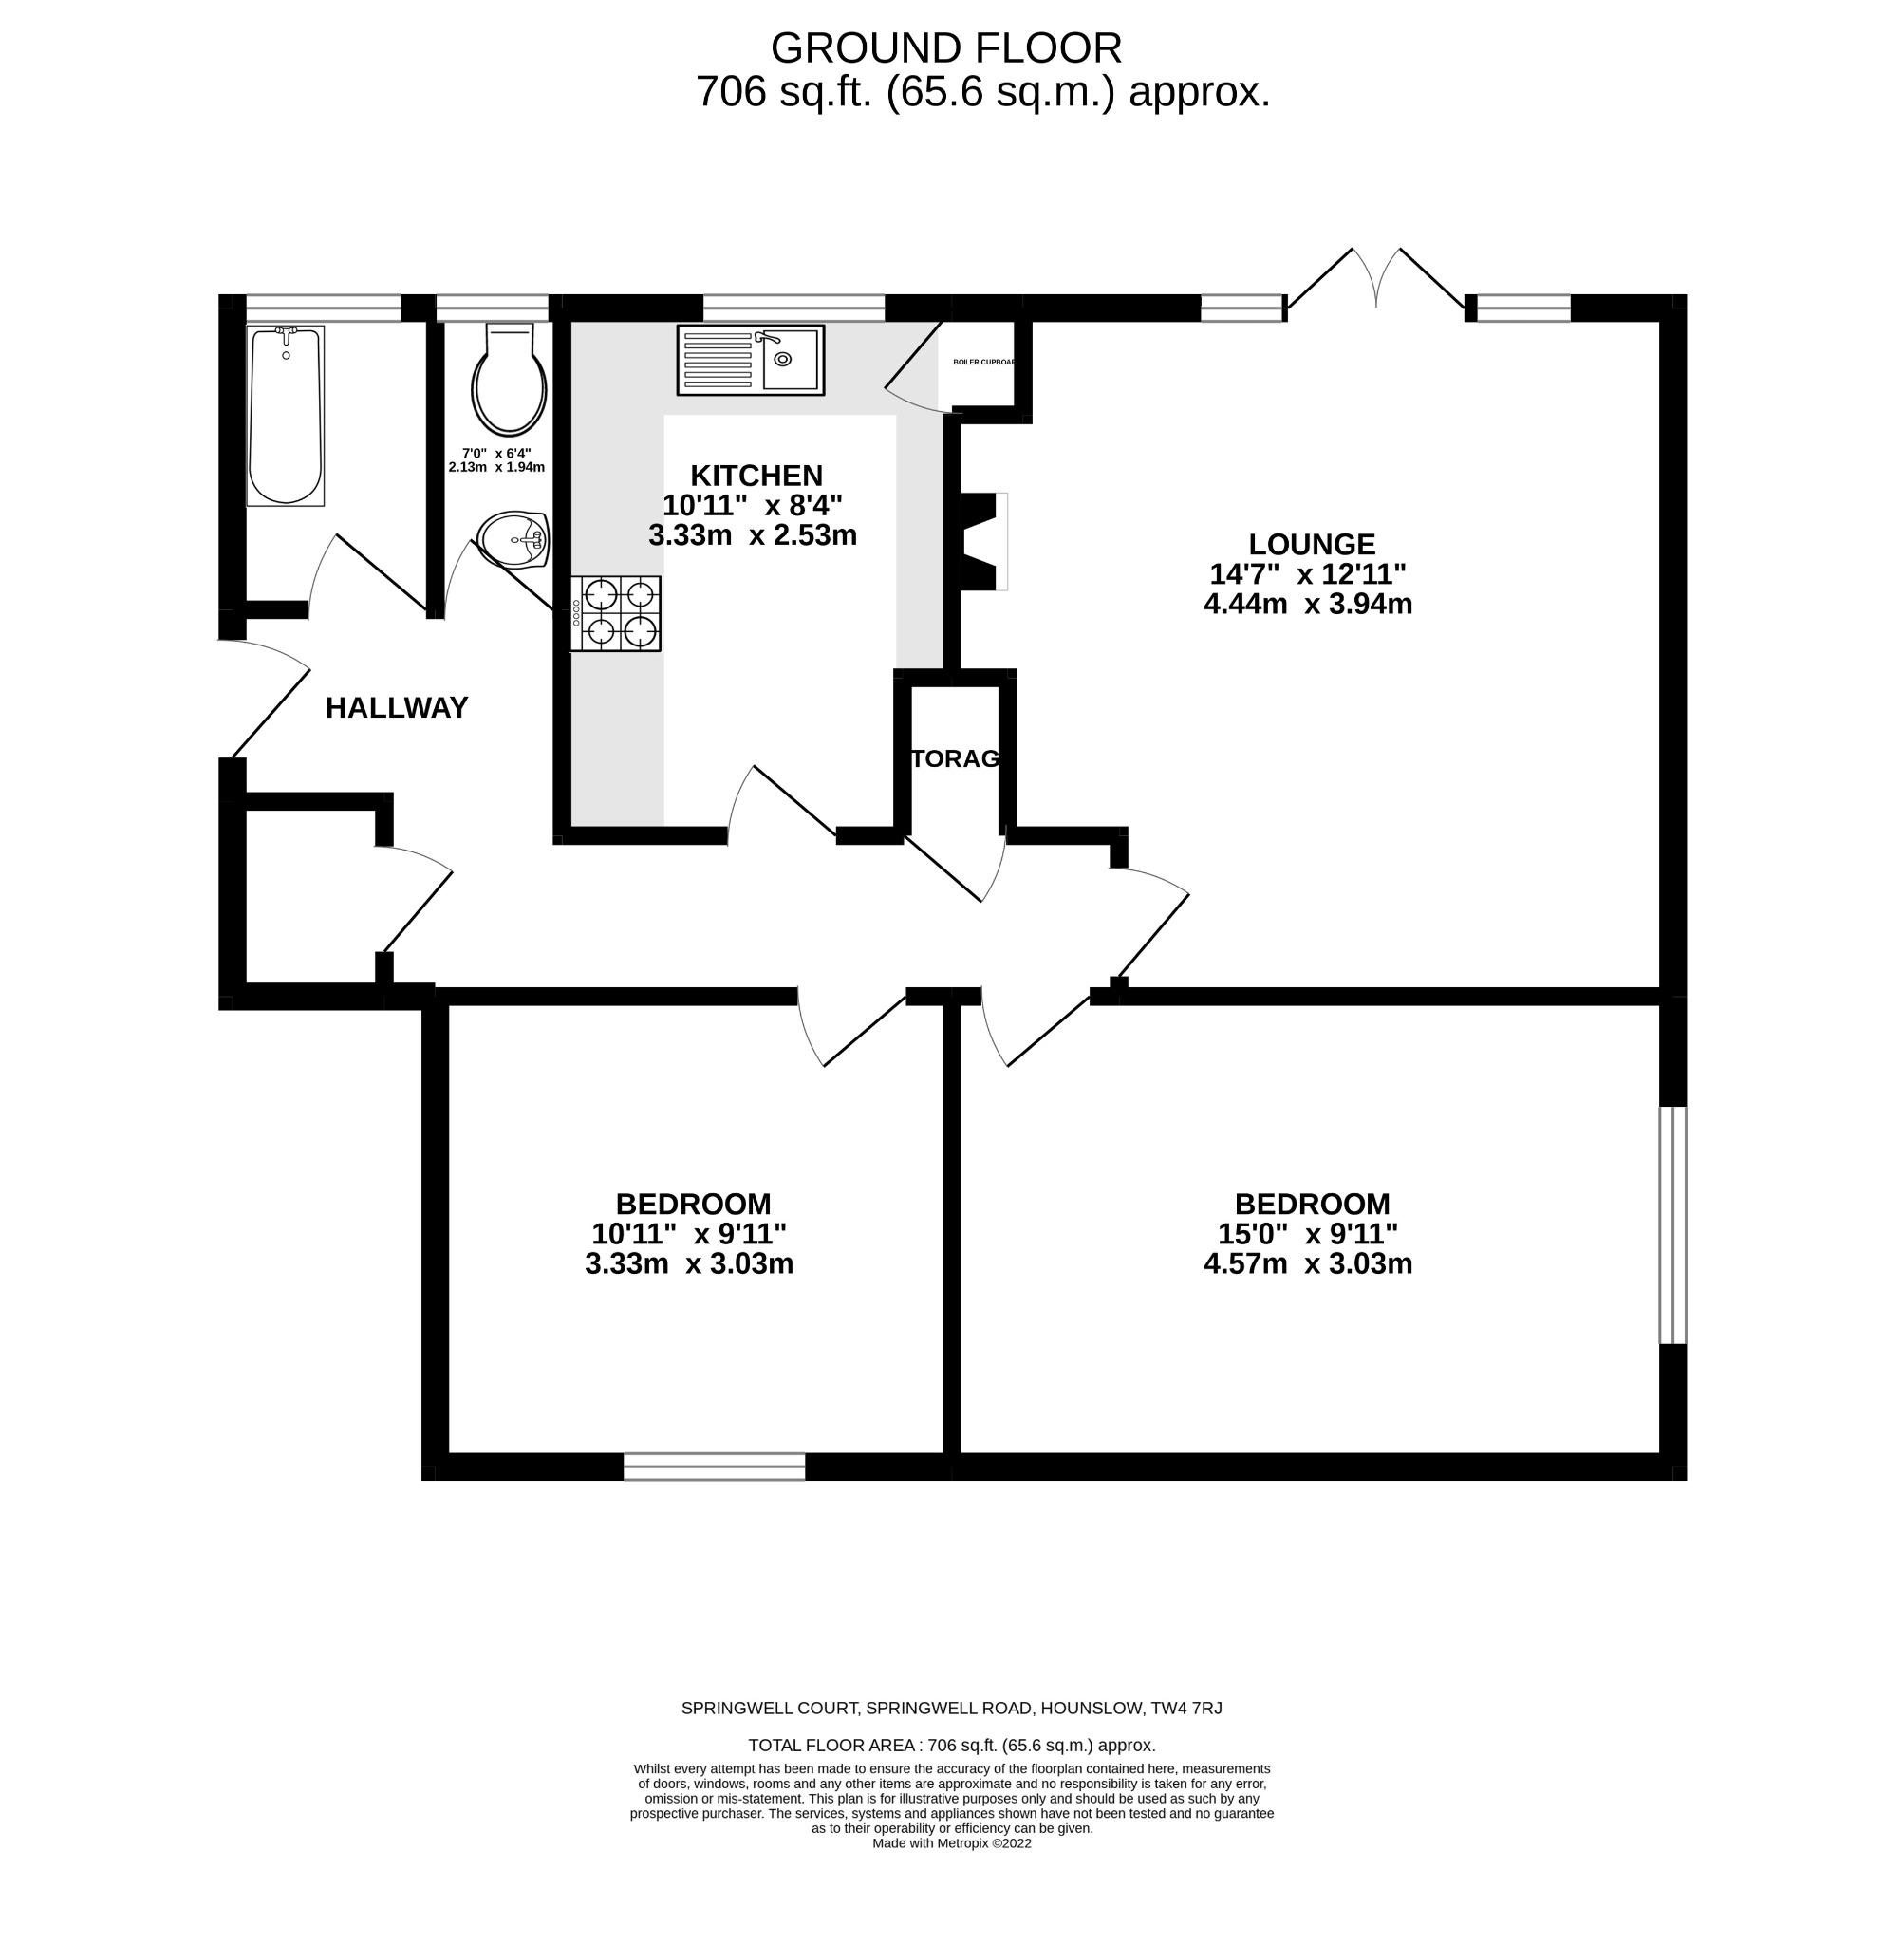 2 bed flat for sale - Property floorplan